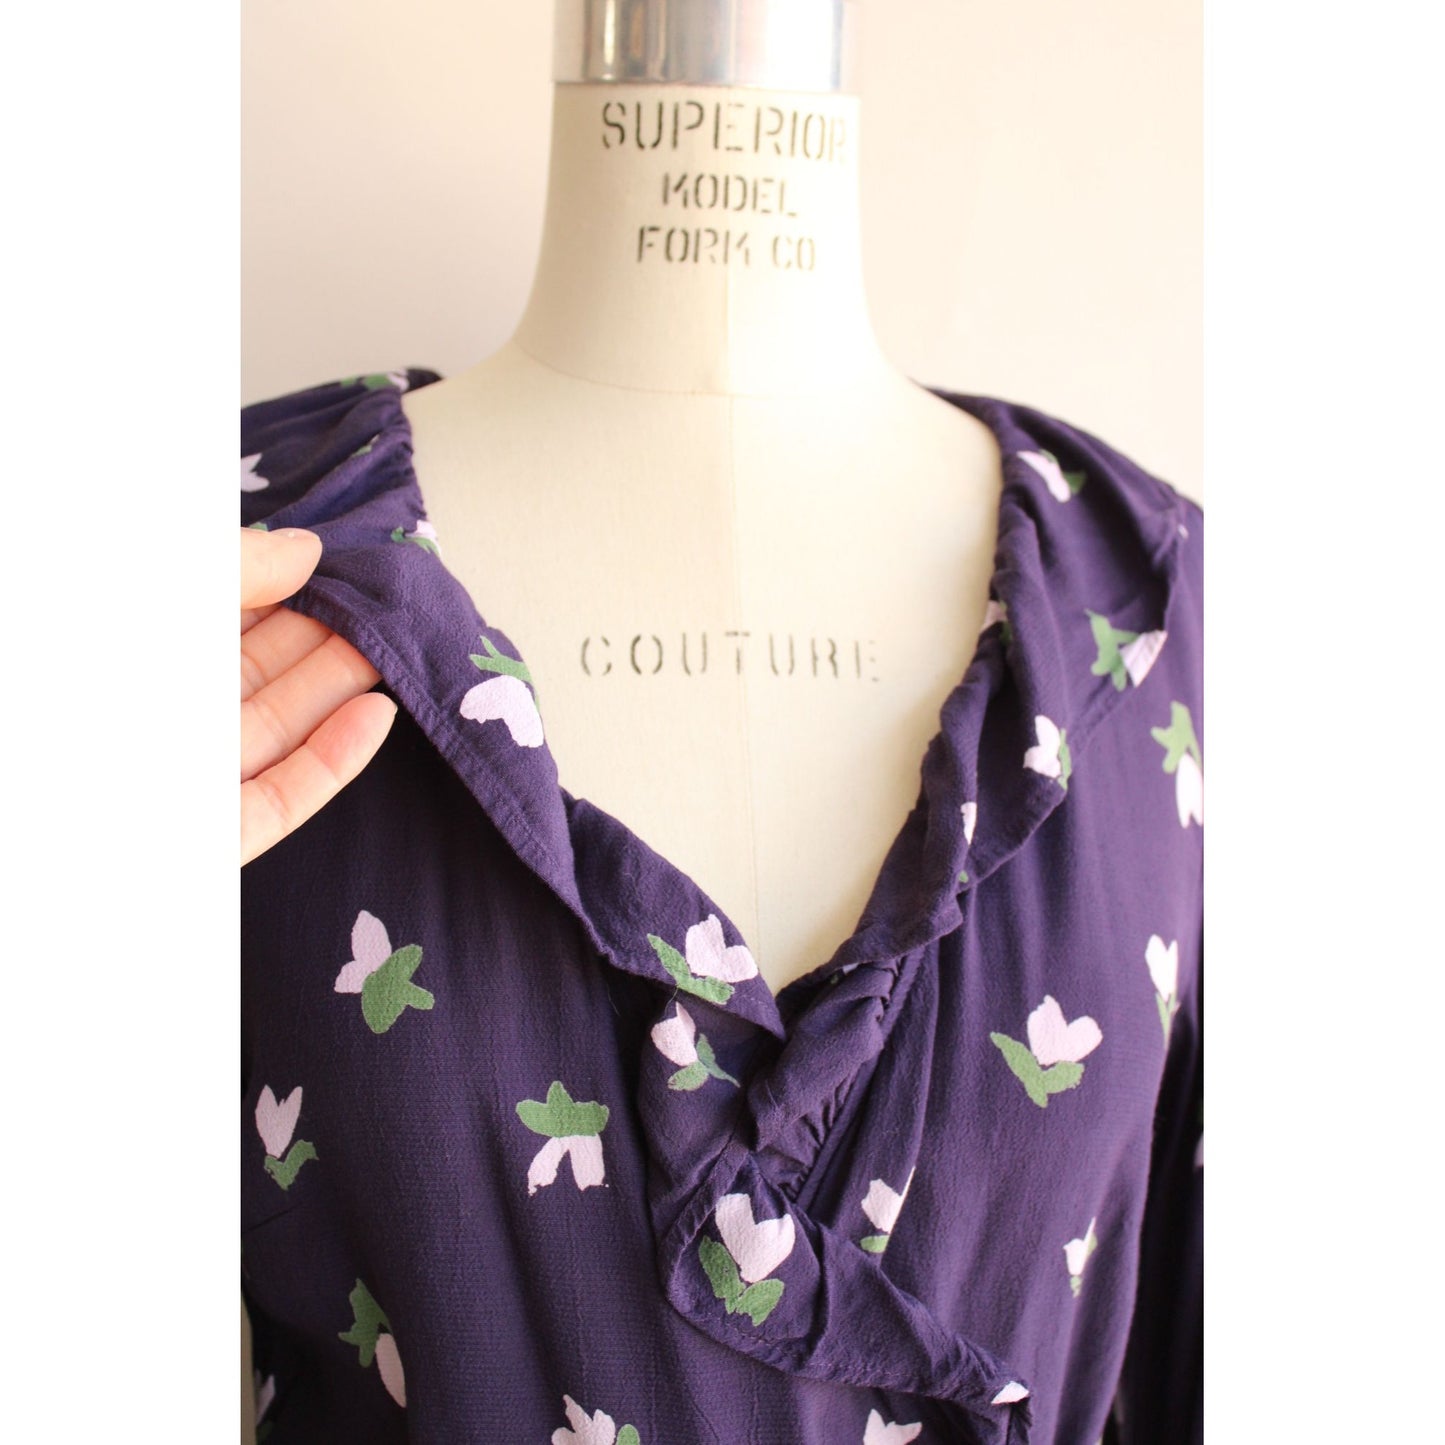 H&M Wrap Dress, Size 4, BLue with White Floral Print